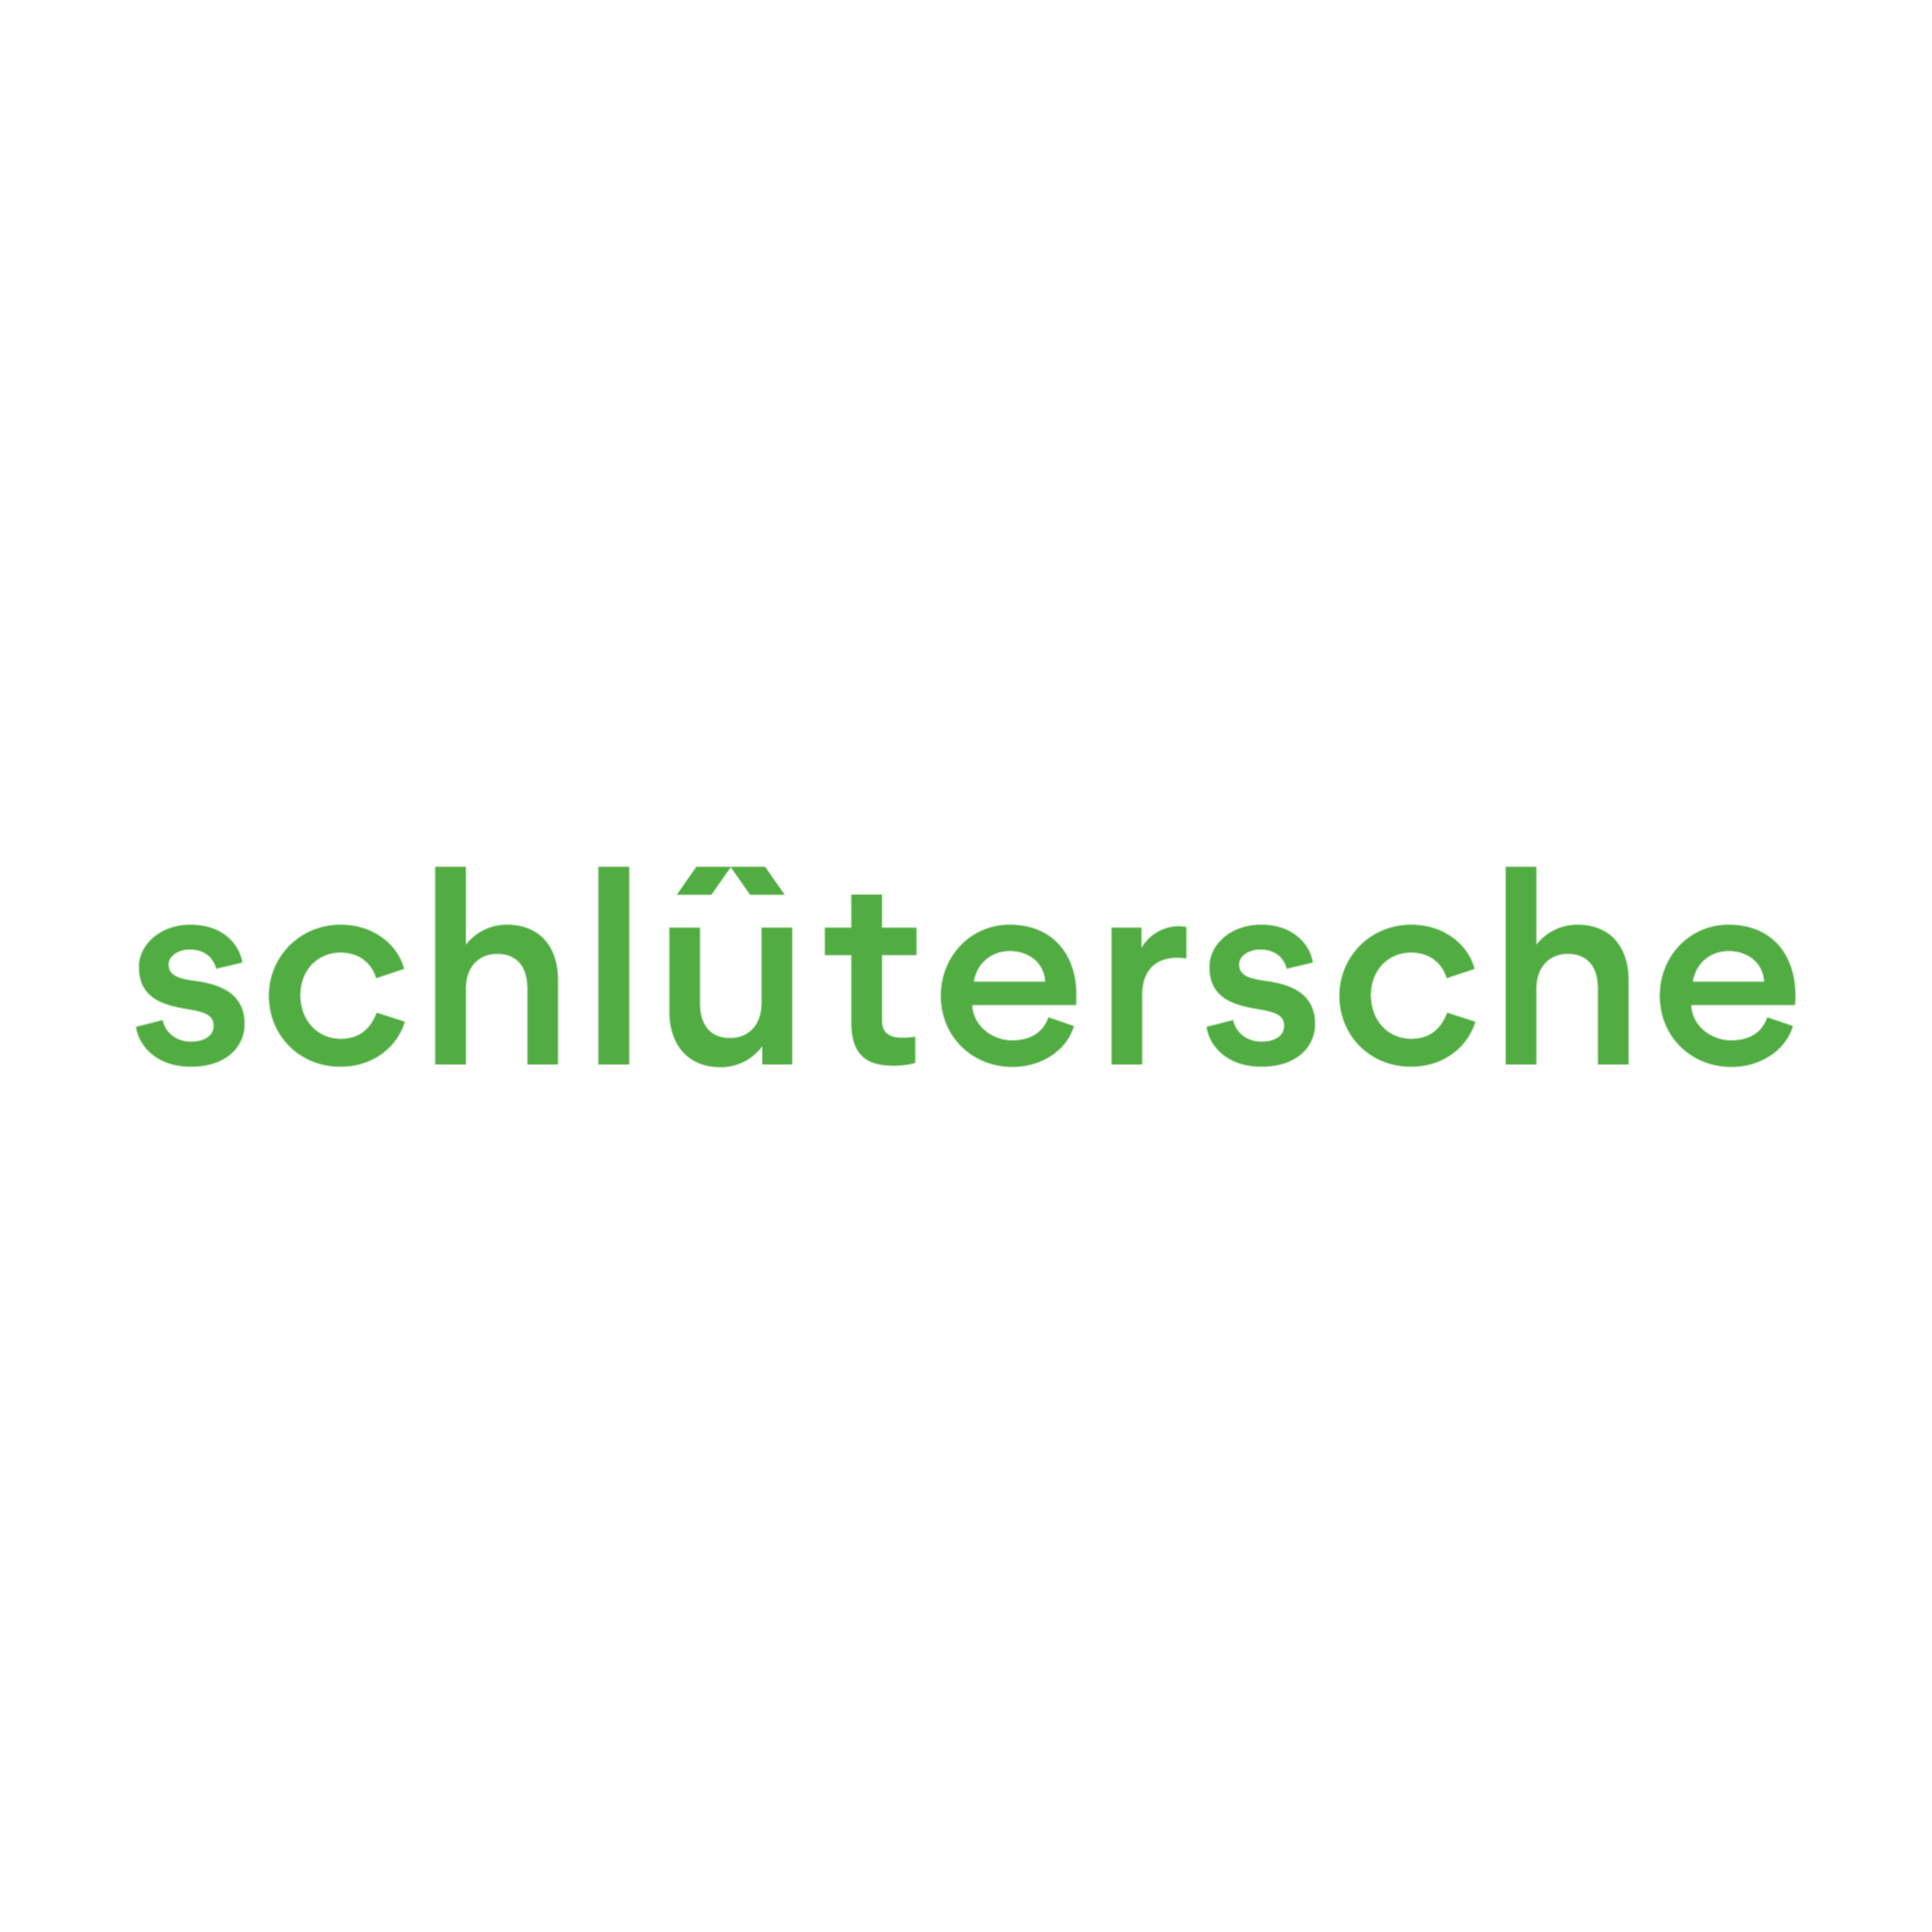 Schlütersche Mediengruppe Logo